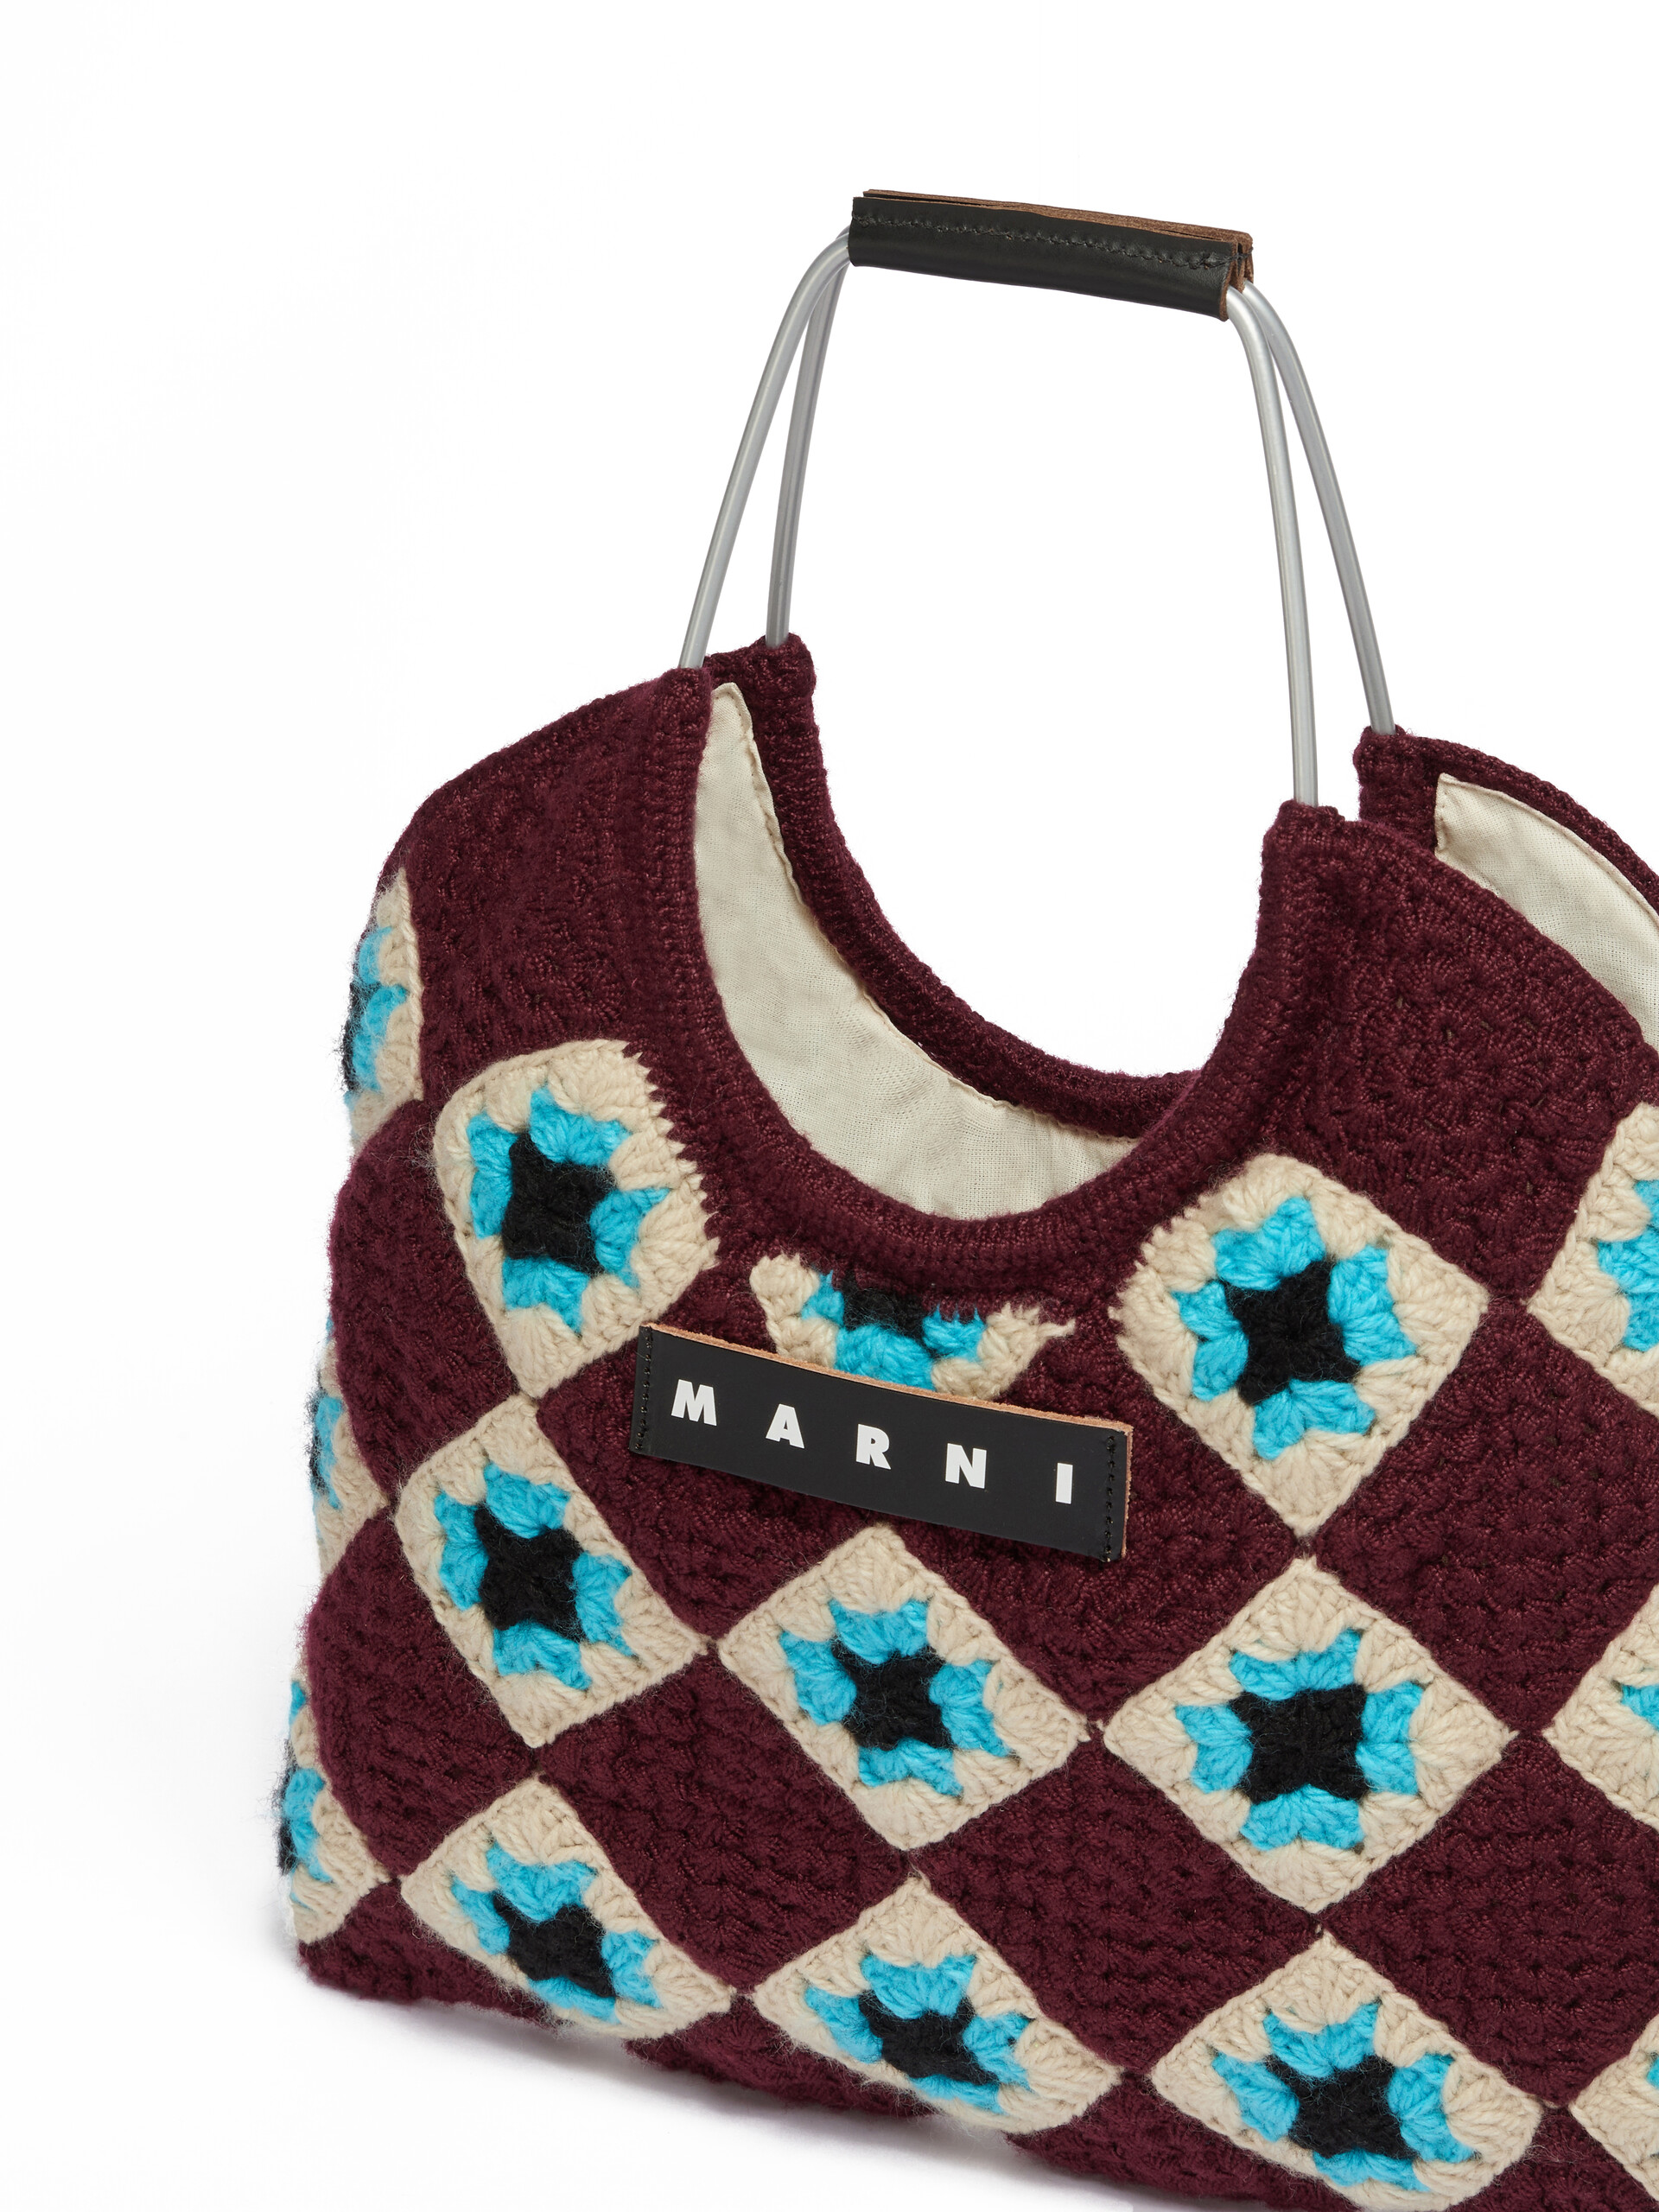 Brown Crochet Marni Market Hedge Bag - Shopping Bags - Image 4